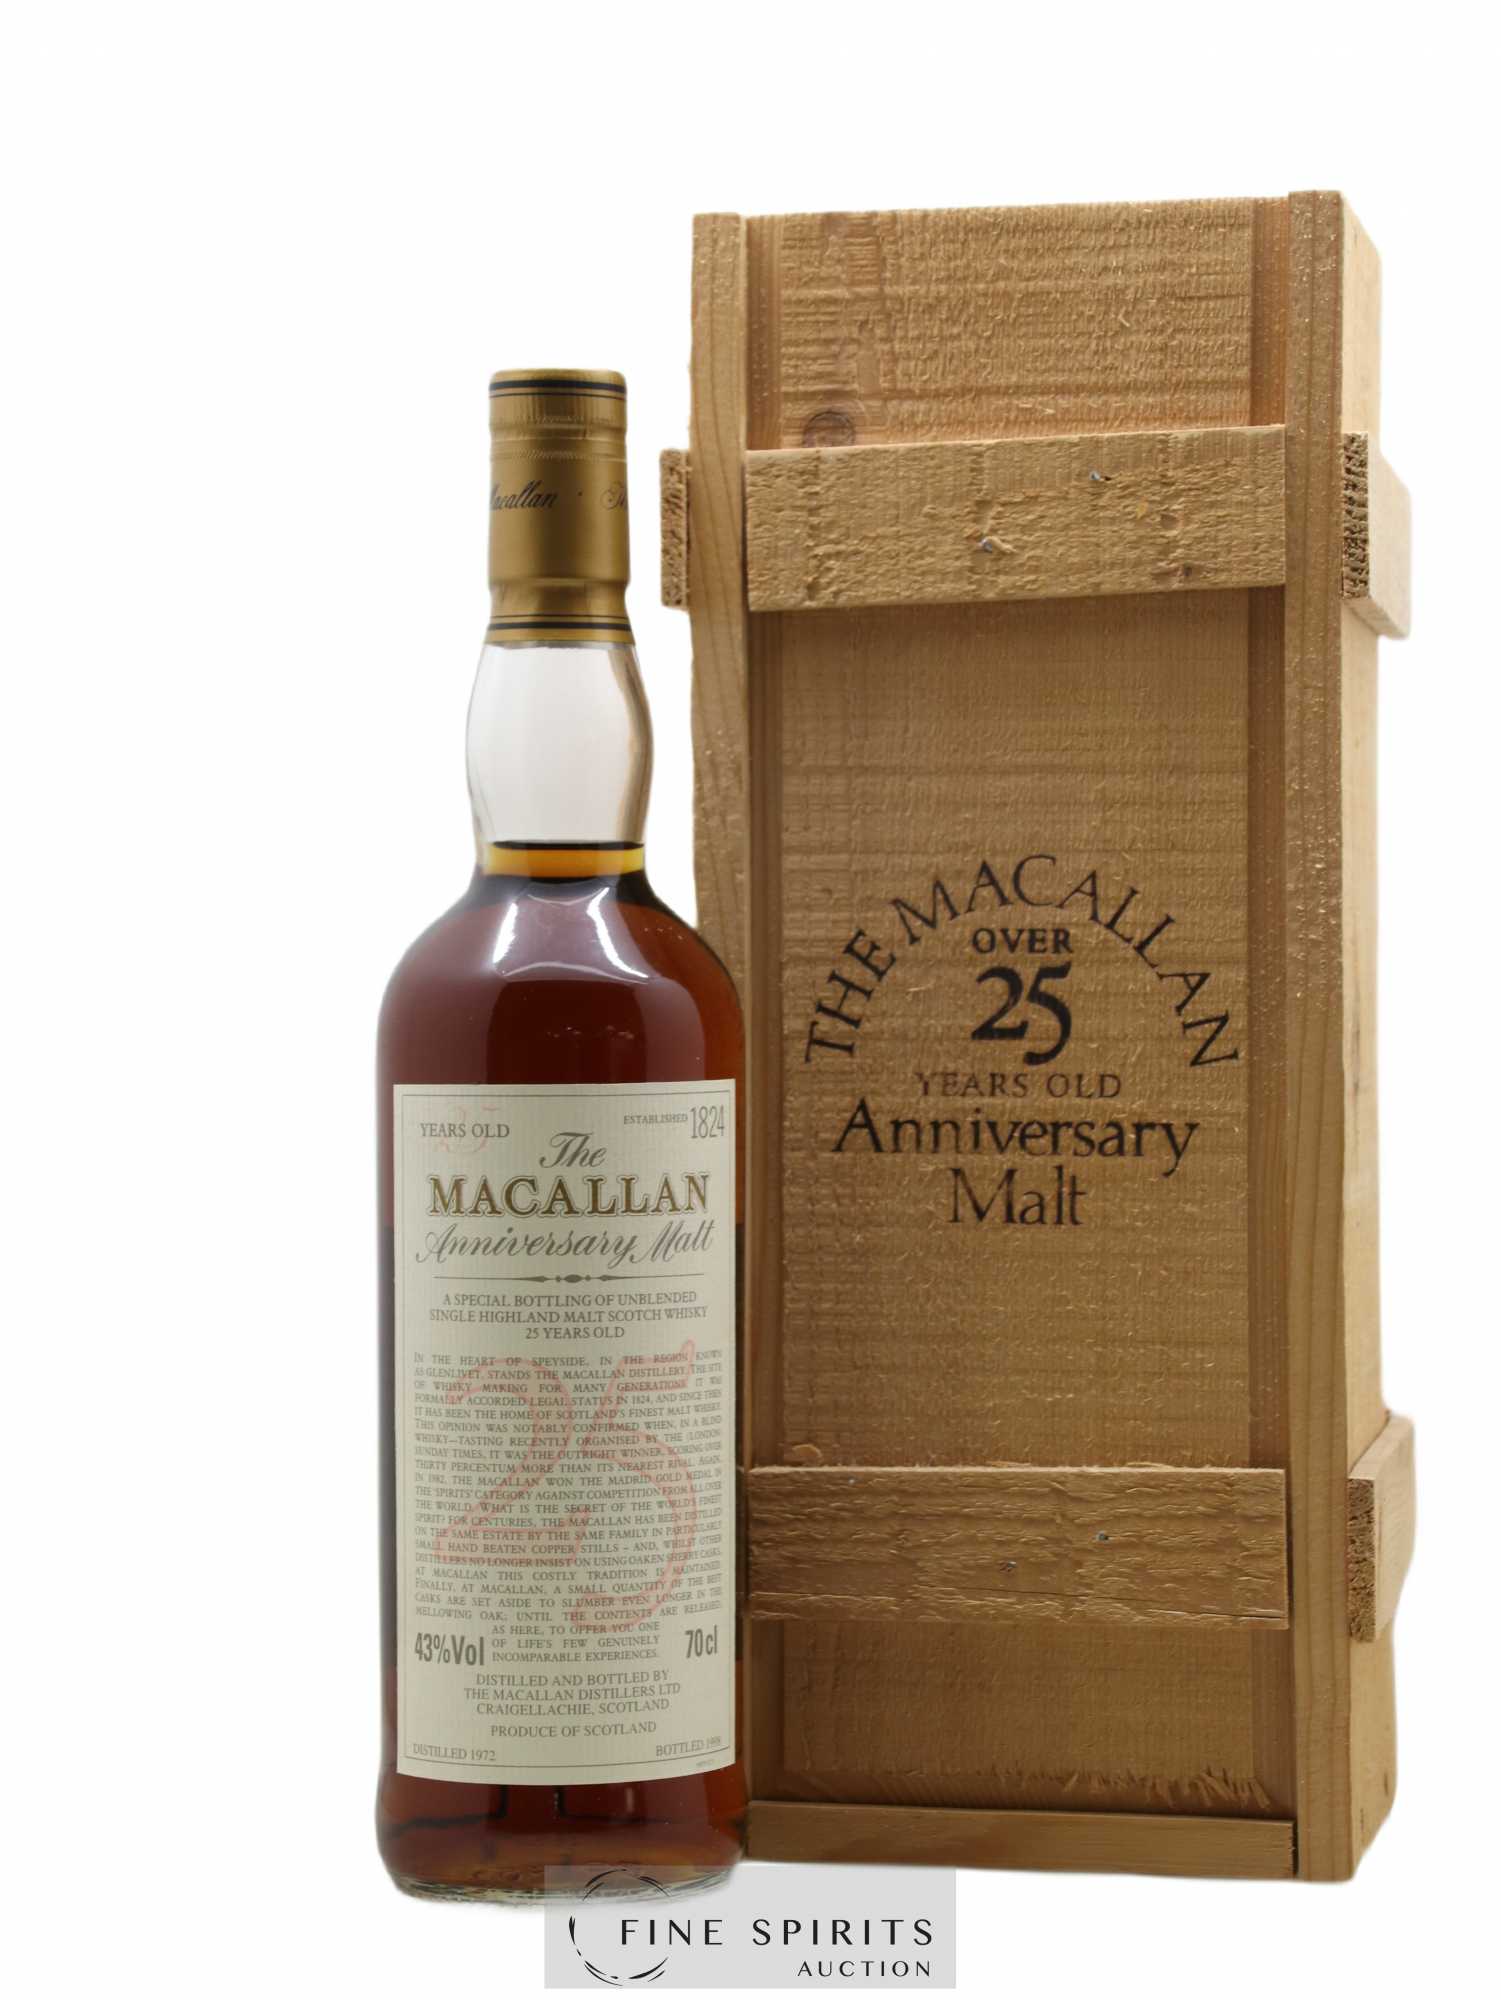 Macallan (The) 25 years 1972 Of. Anniversary Malt bottled 1998 Special Bottling